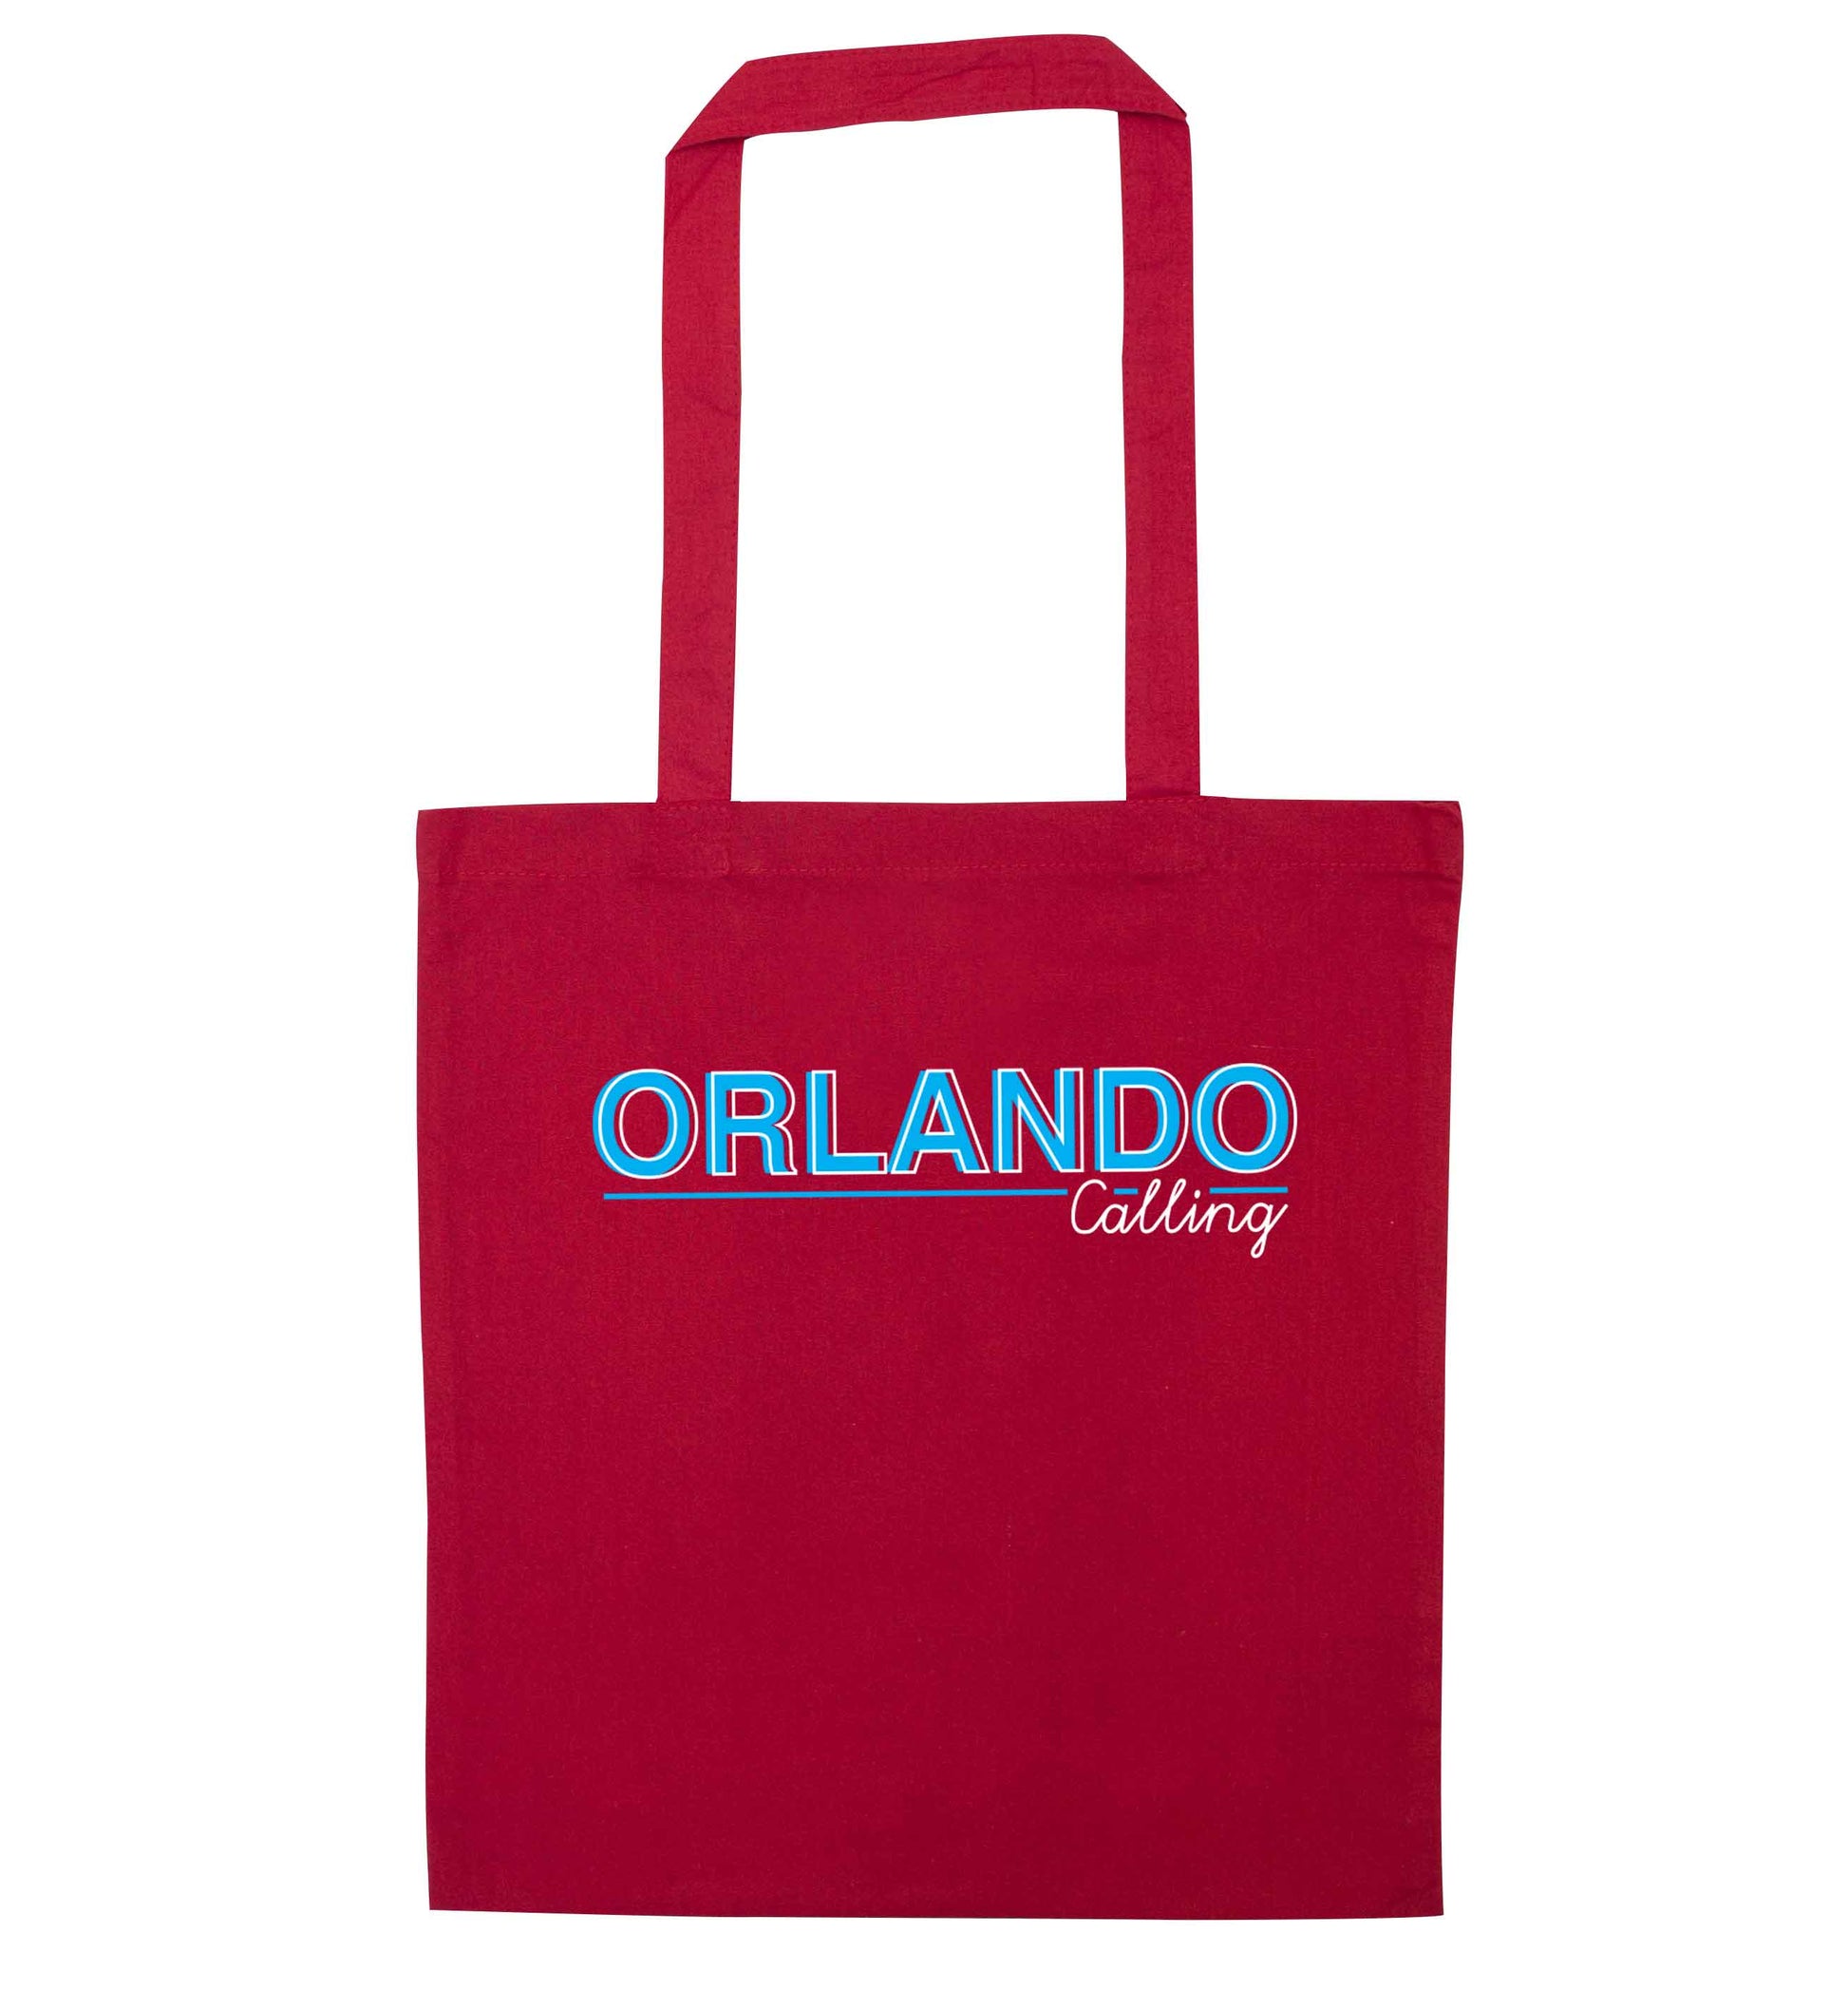 Orlando calling red tote bag